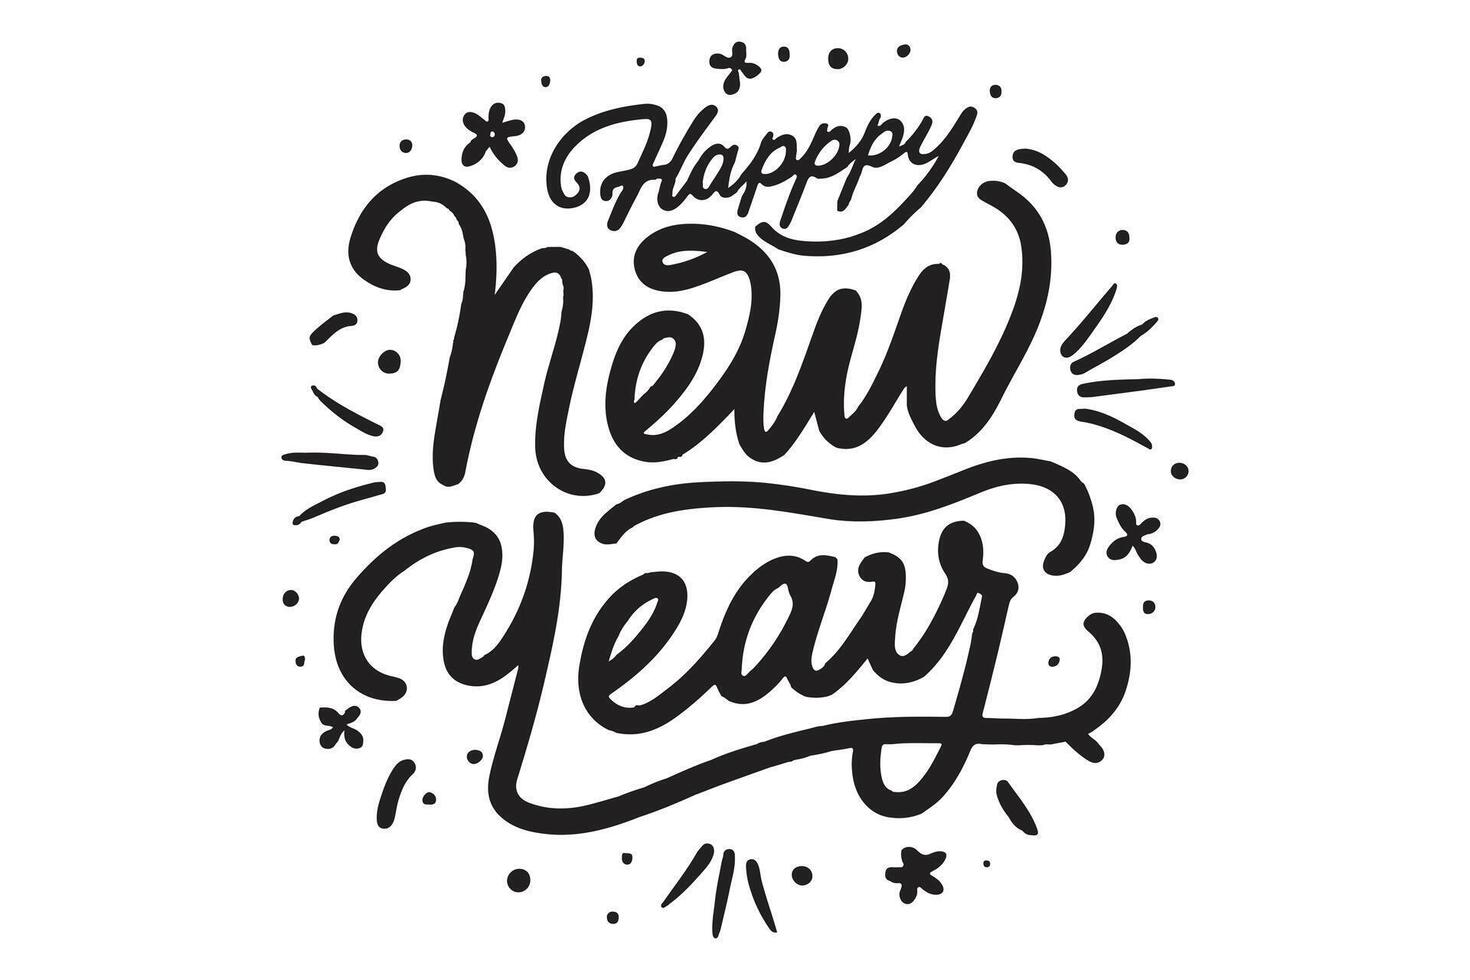 Happy New Year text vector design